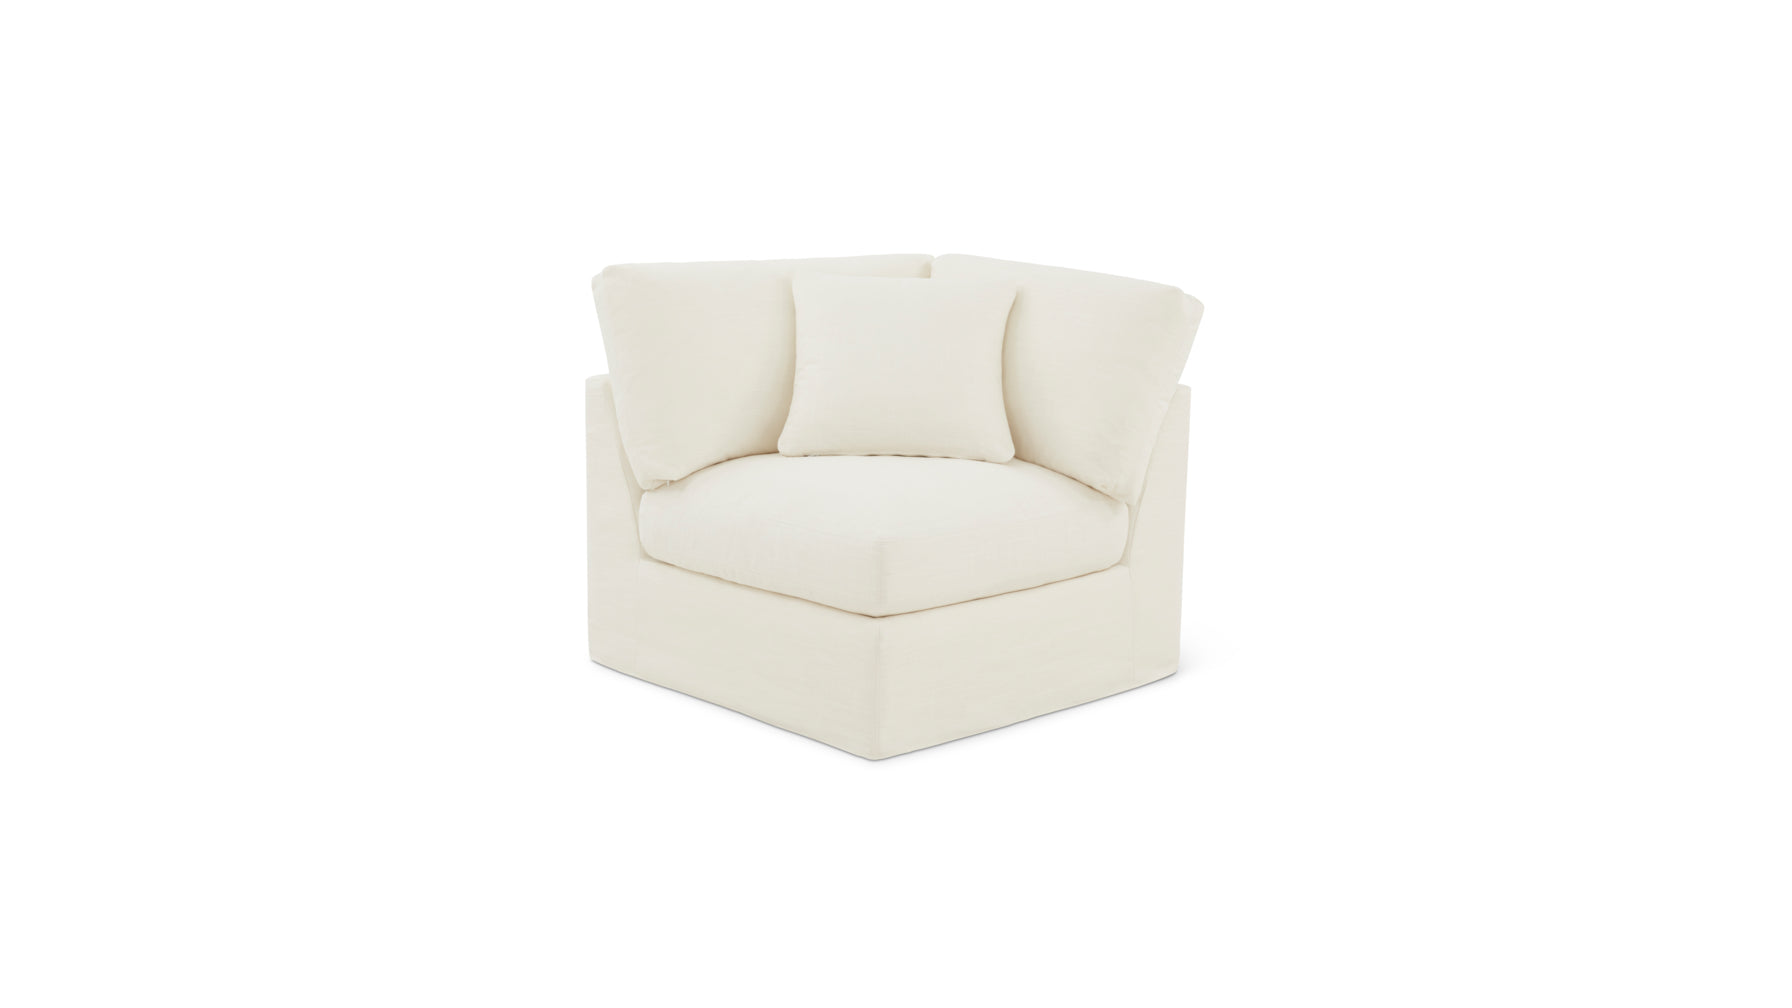 Get Together™ Corner Chair, Standard, Cream Linen - Image 6